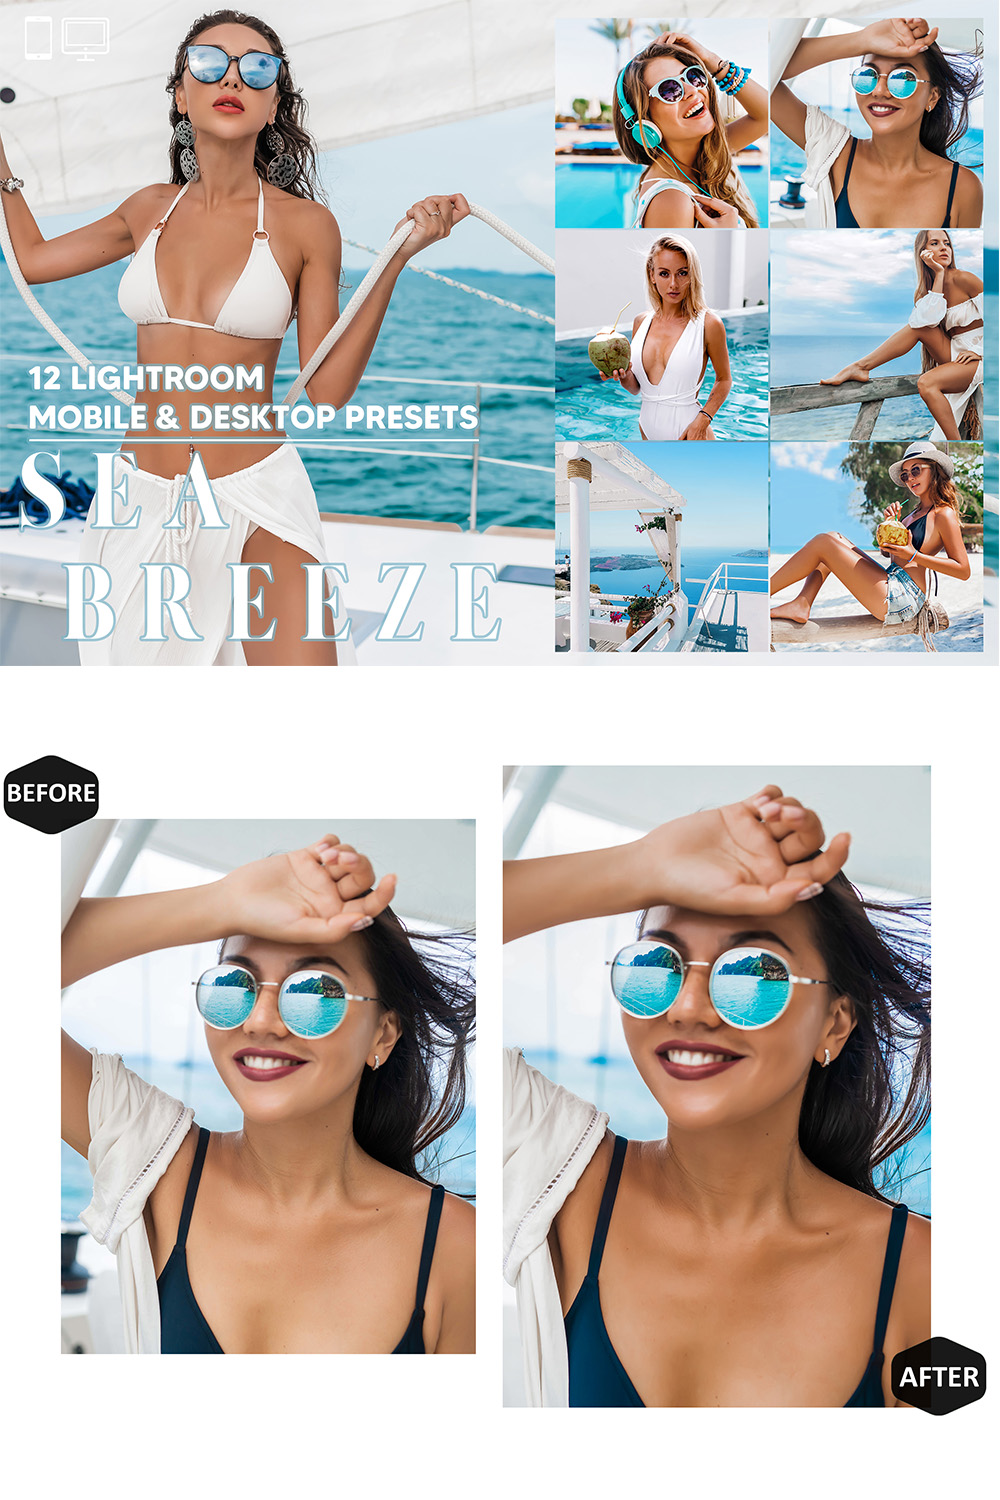 12 Sea Breeze Lightroom Presets, Bright Summer Mobile Preset, Beach Desktop LR Filter DNG Lifestyle Theme For Blogger Portrait Instagram pinterest preview image.